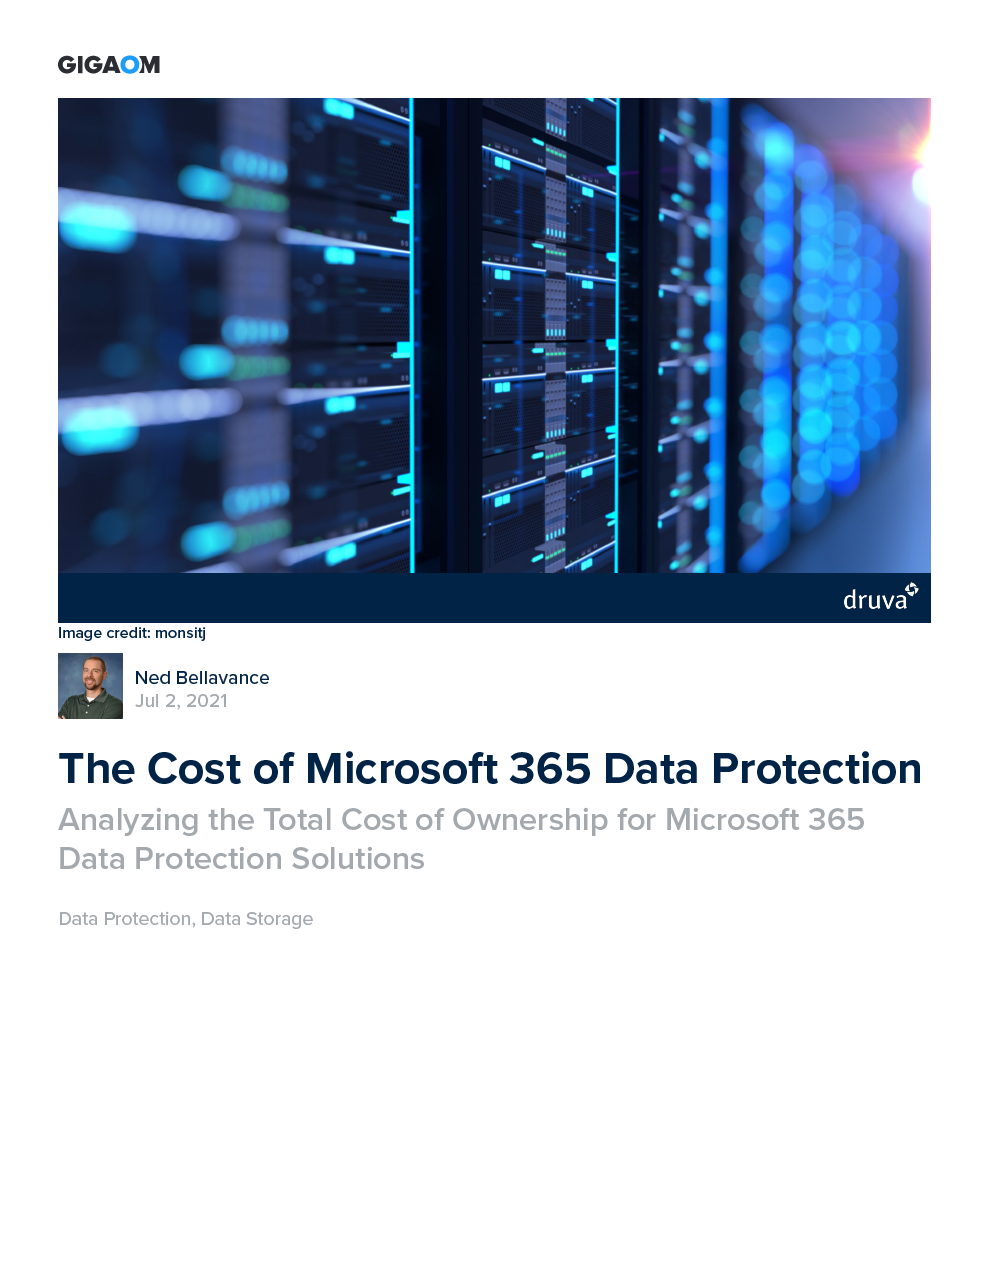 Microsoft 365 Data Protection Analysis